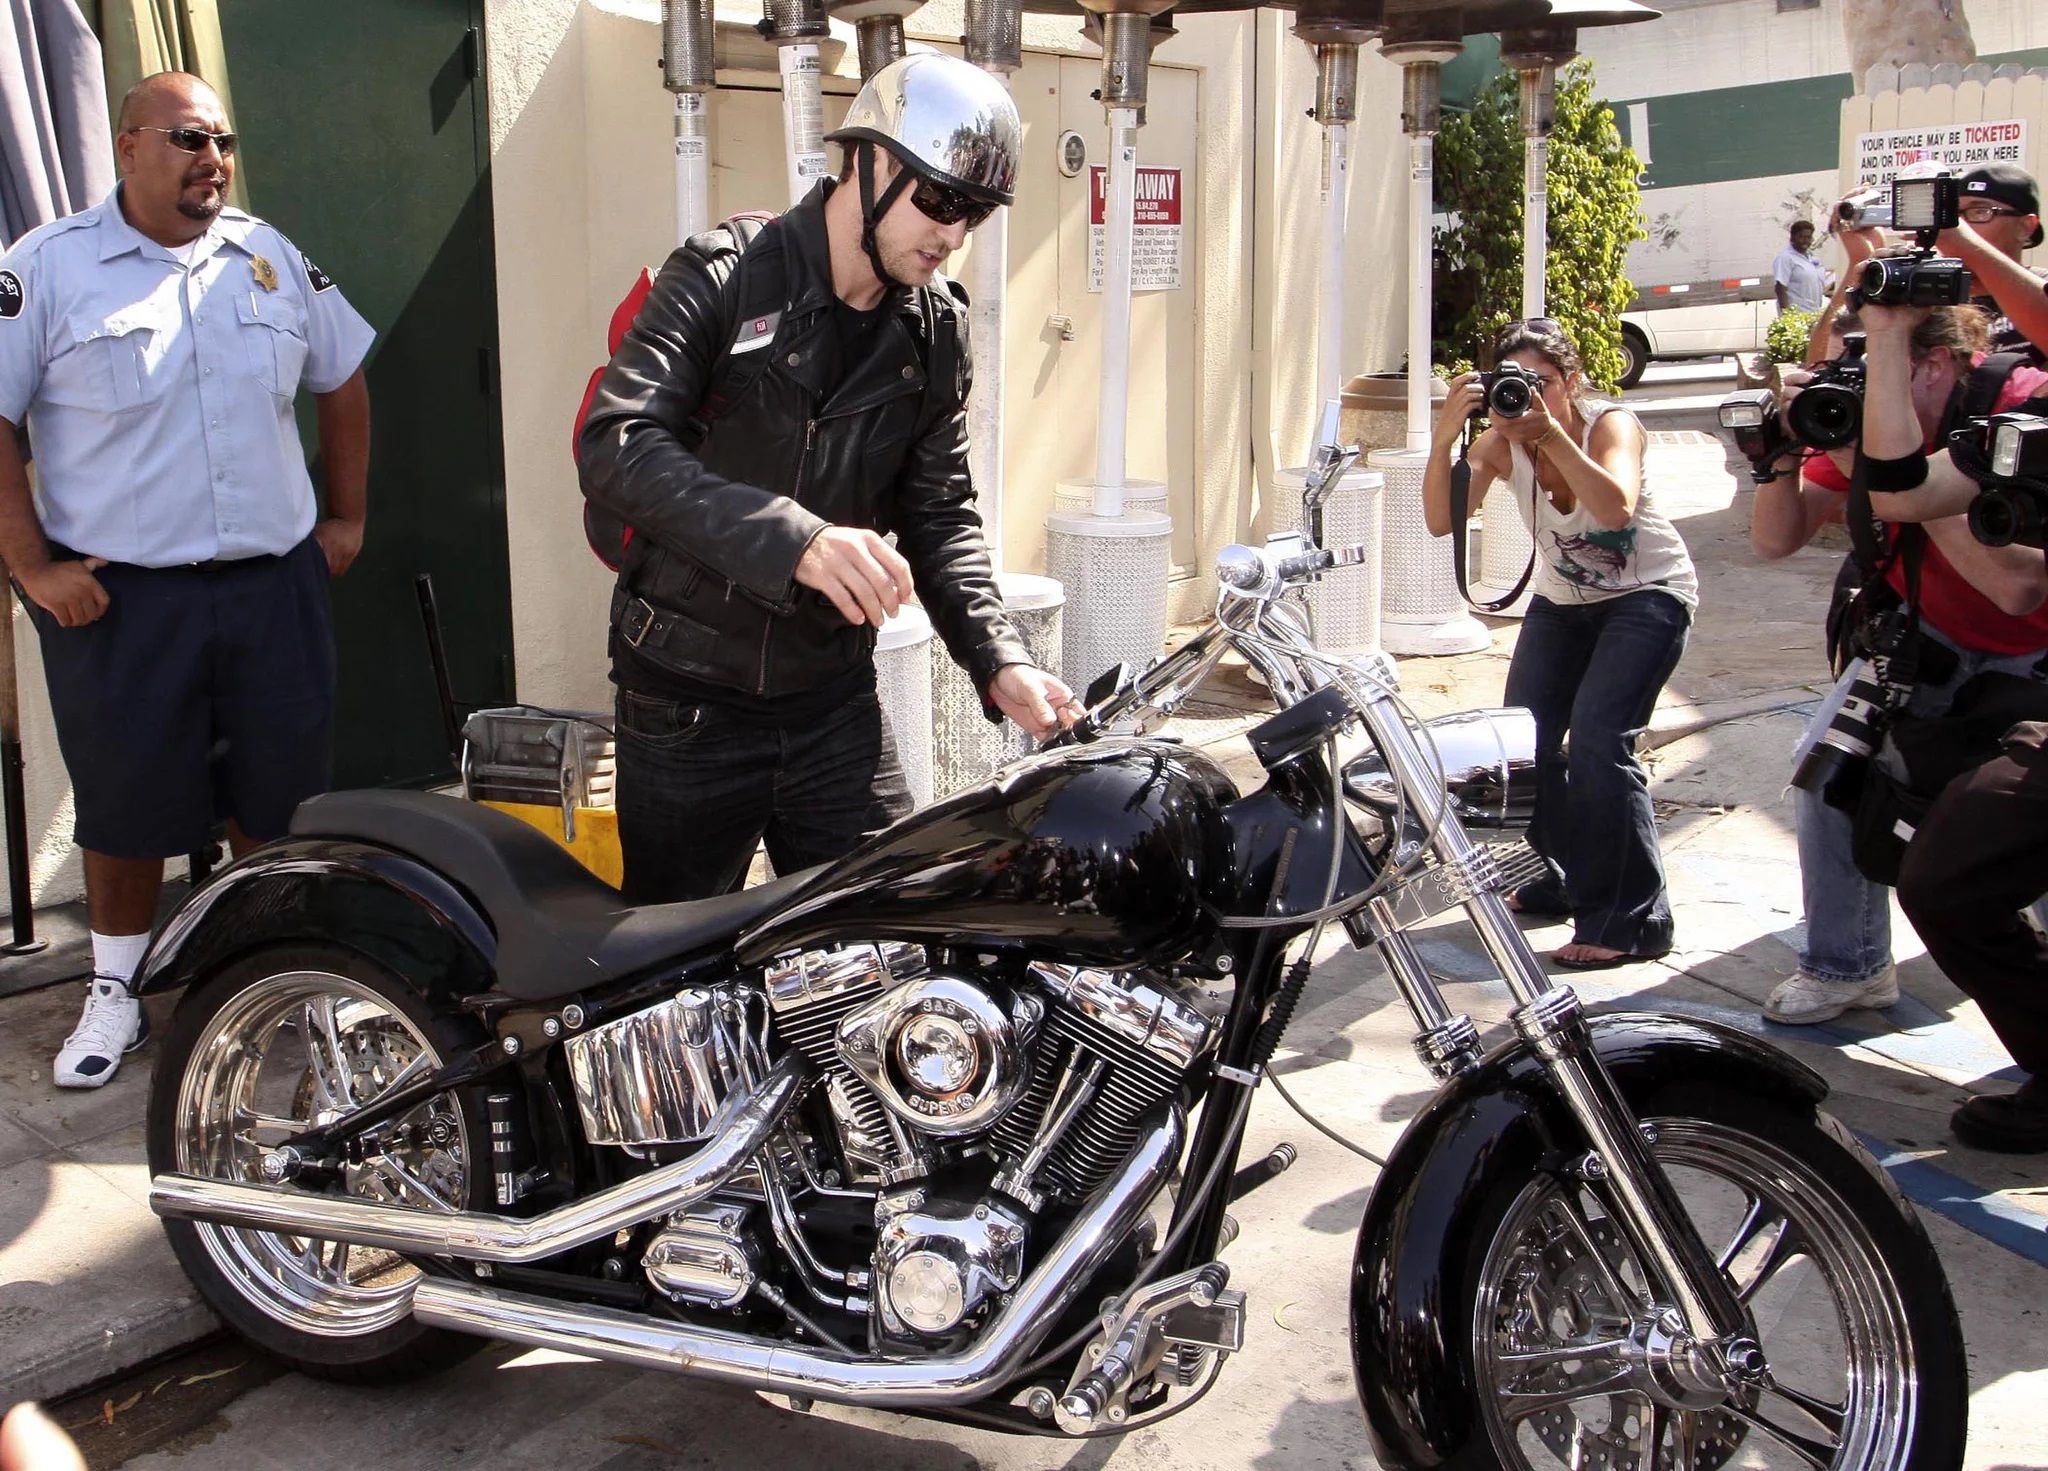 Justin Timberlake with a bike